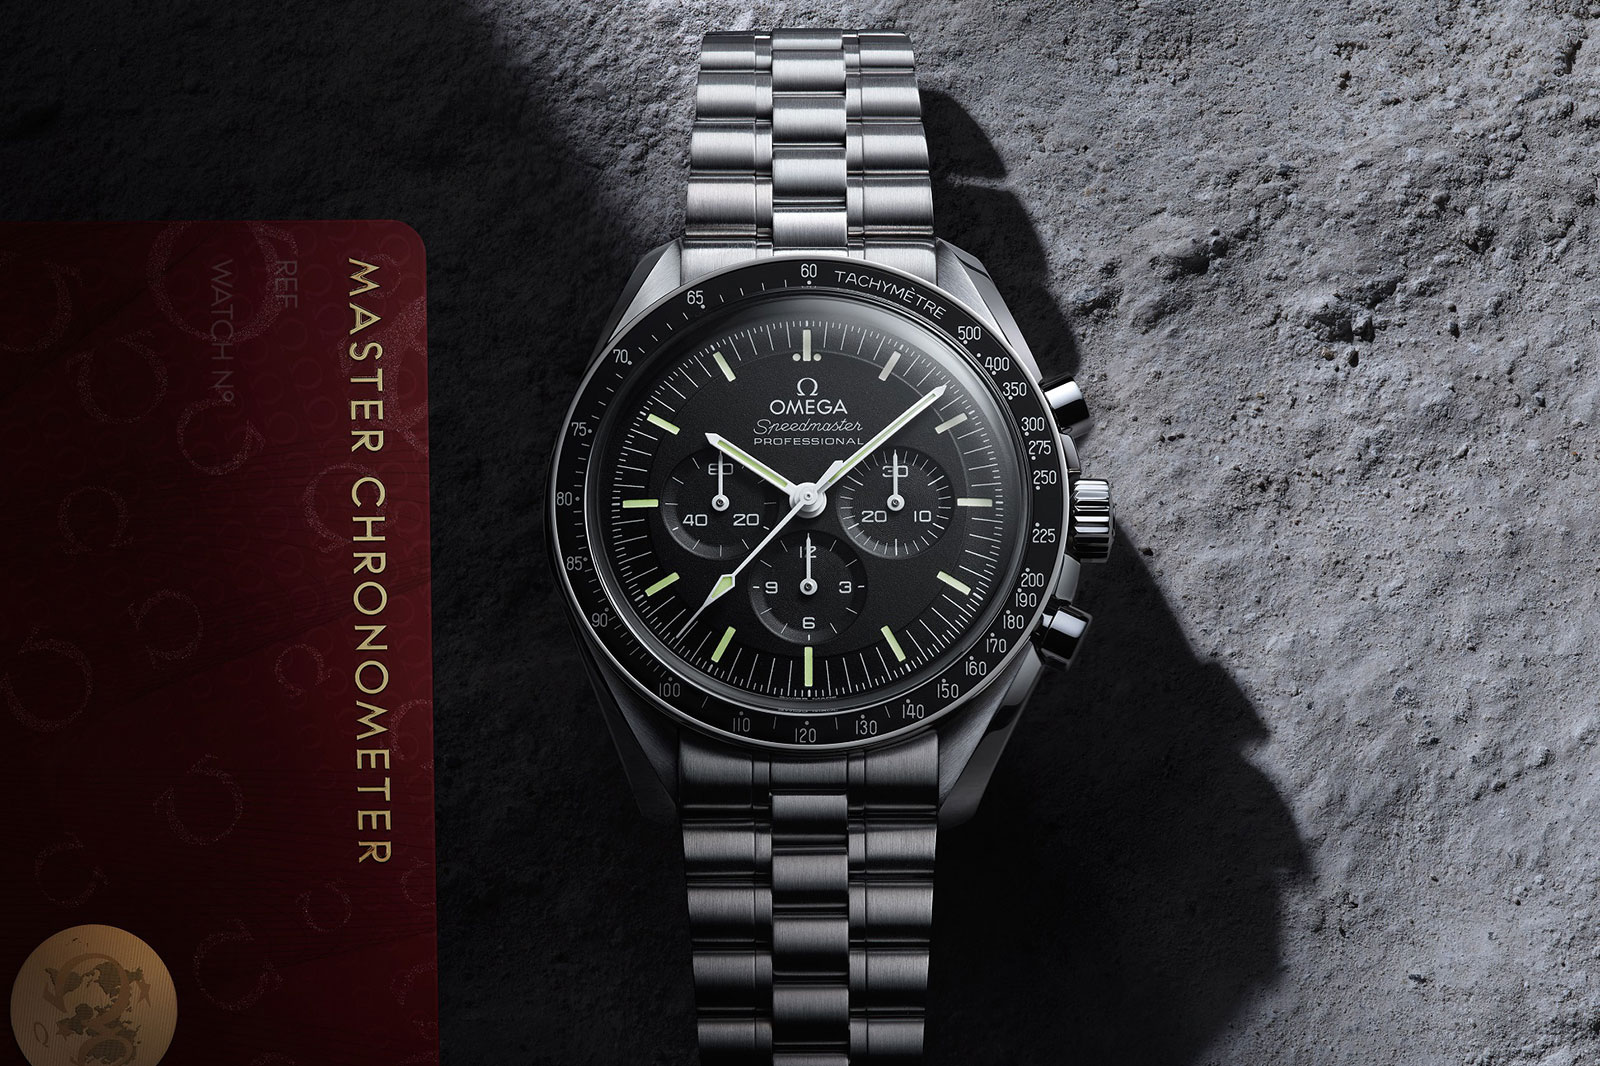 Moonwatch Professional Speedmaster Canopus Gold™ Chronograph Watch  310.60.42.50.02.001